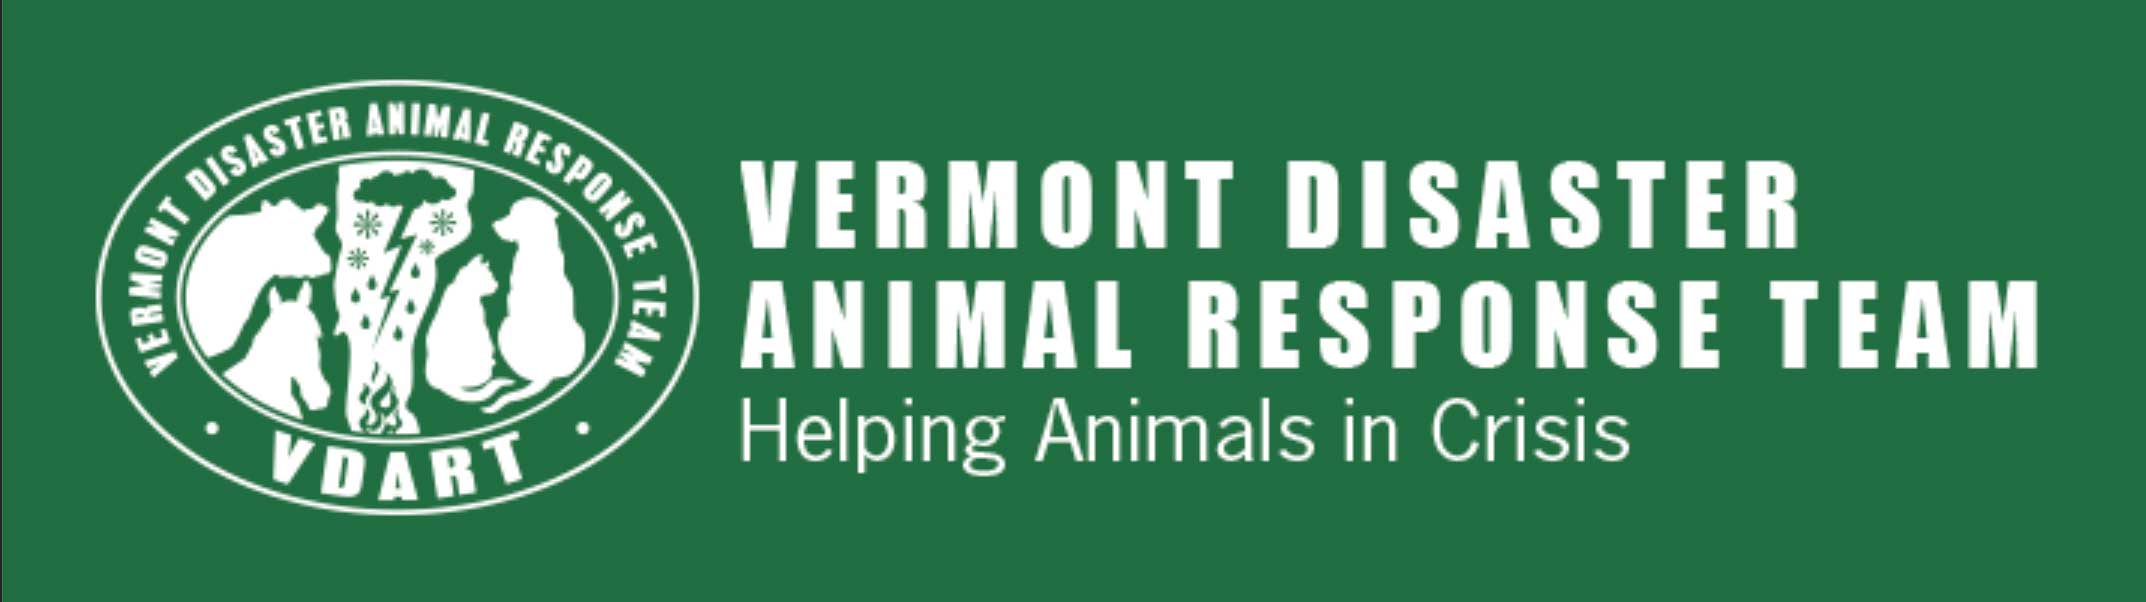 Vermont Disaster Animal Response Team logo